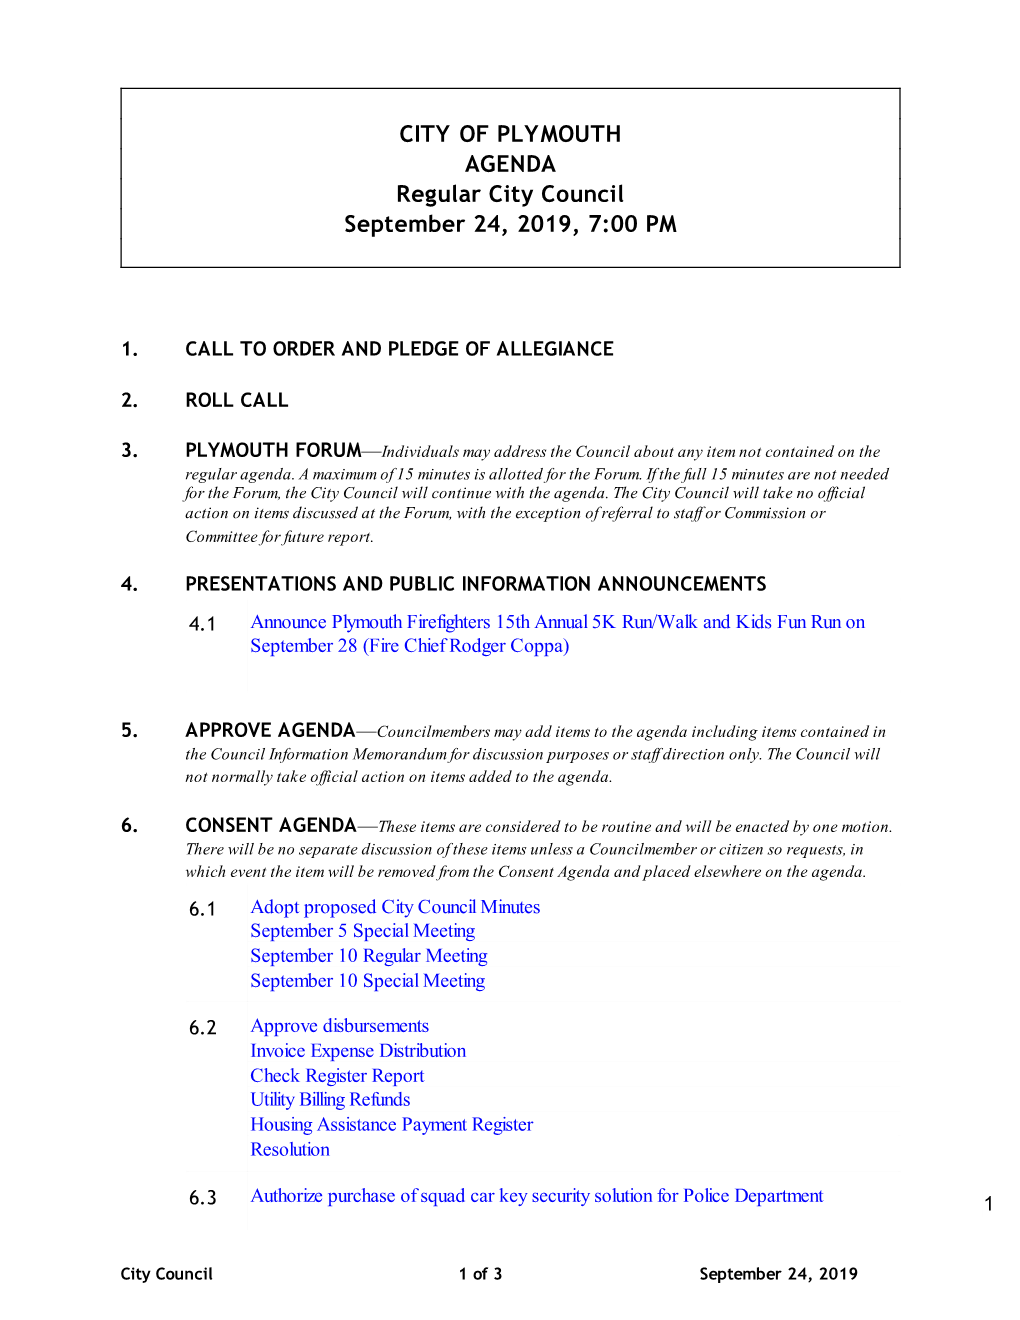 CITY of PLYMOUTH AGENDA Regular City Council September 24, 2019, 7:00 PM